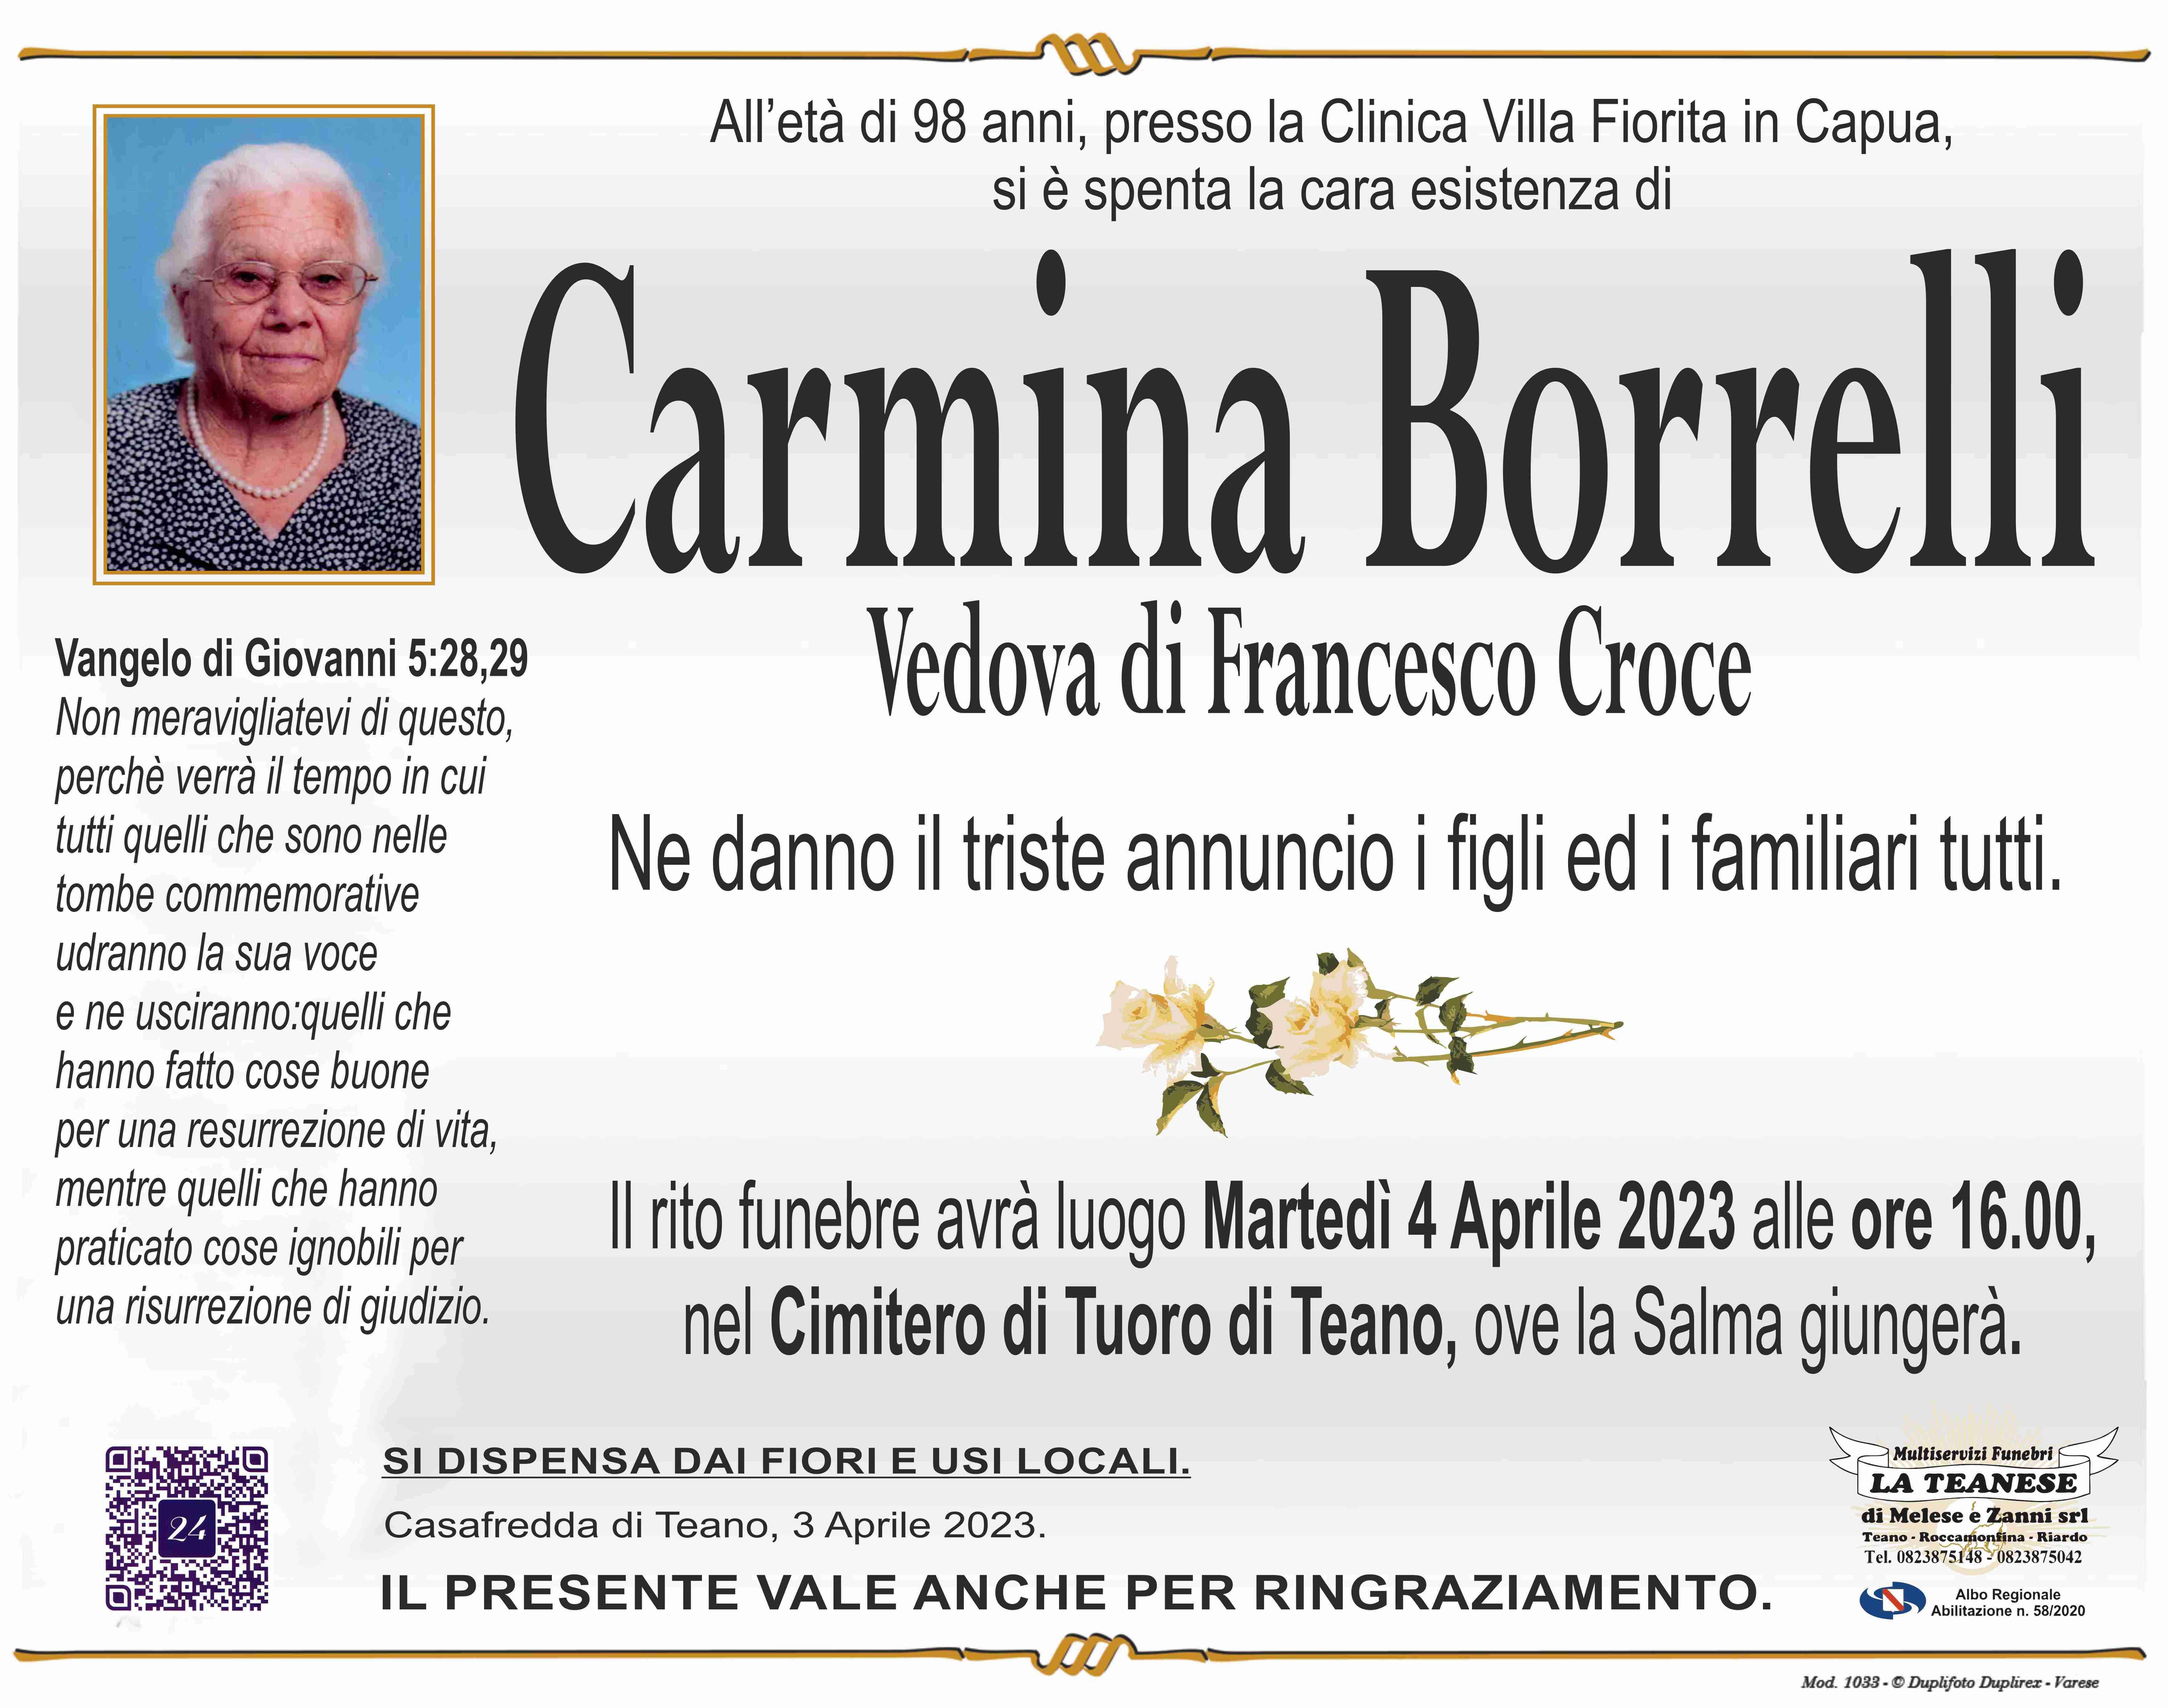 Carmina Borrelli